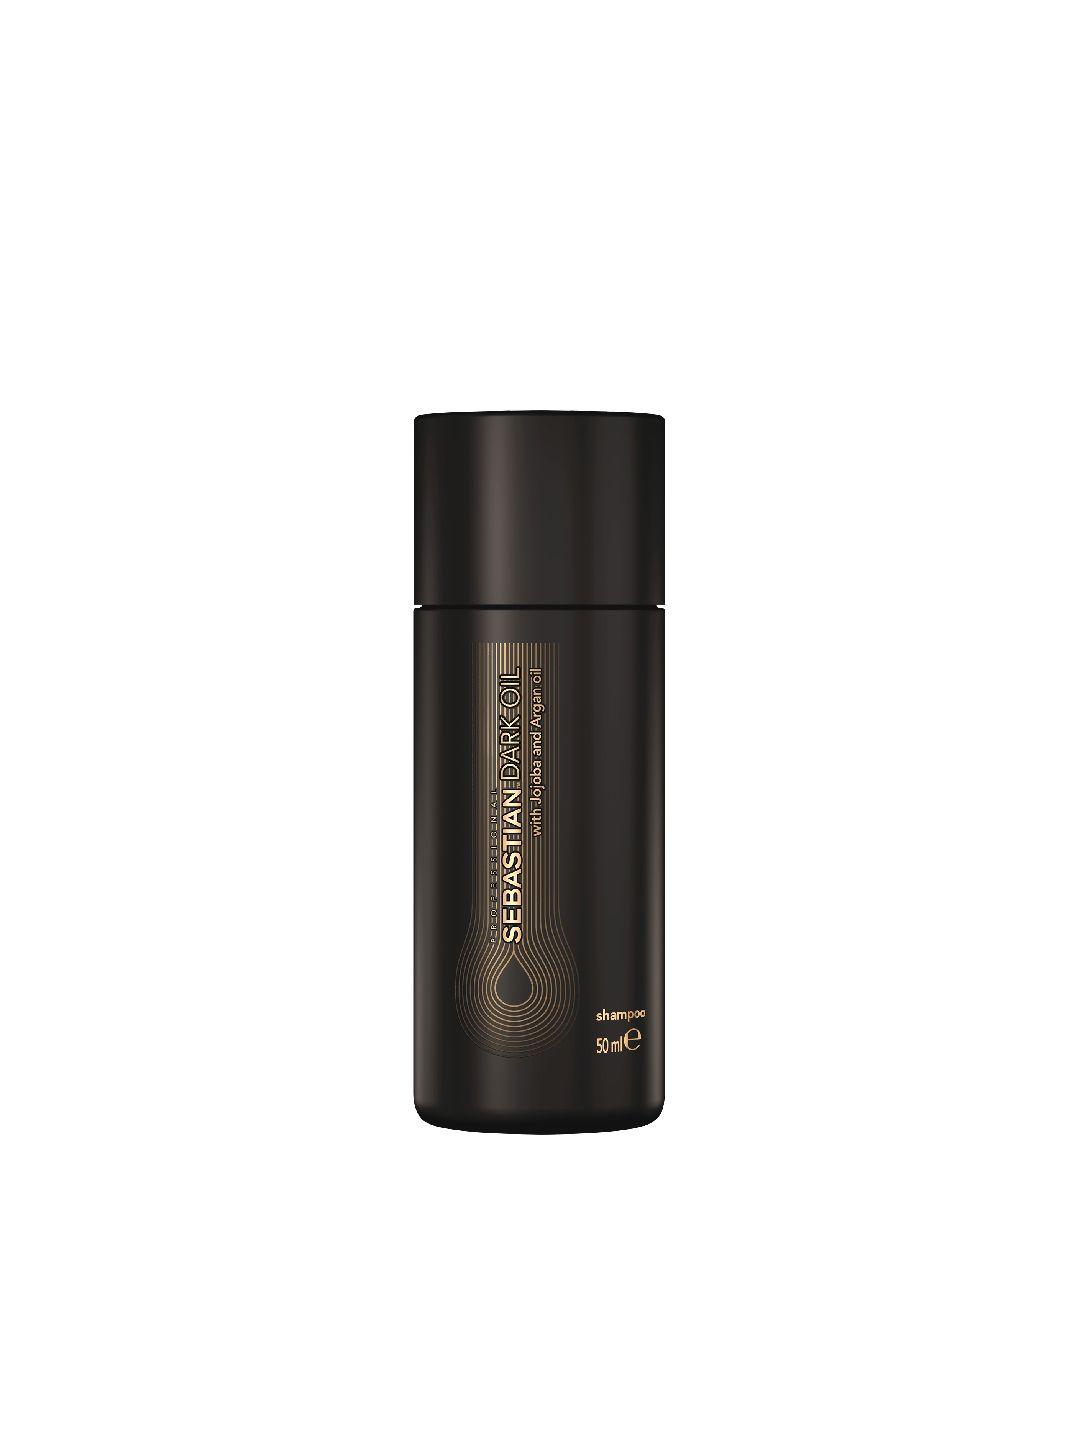 sebastian professional dark oil lightweight shampoo with jojoba & argan oil - 50 ml